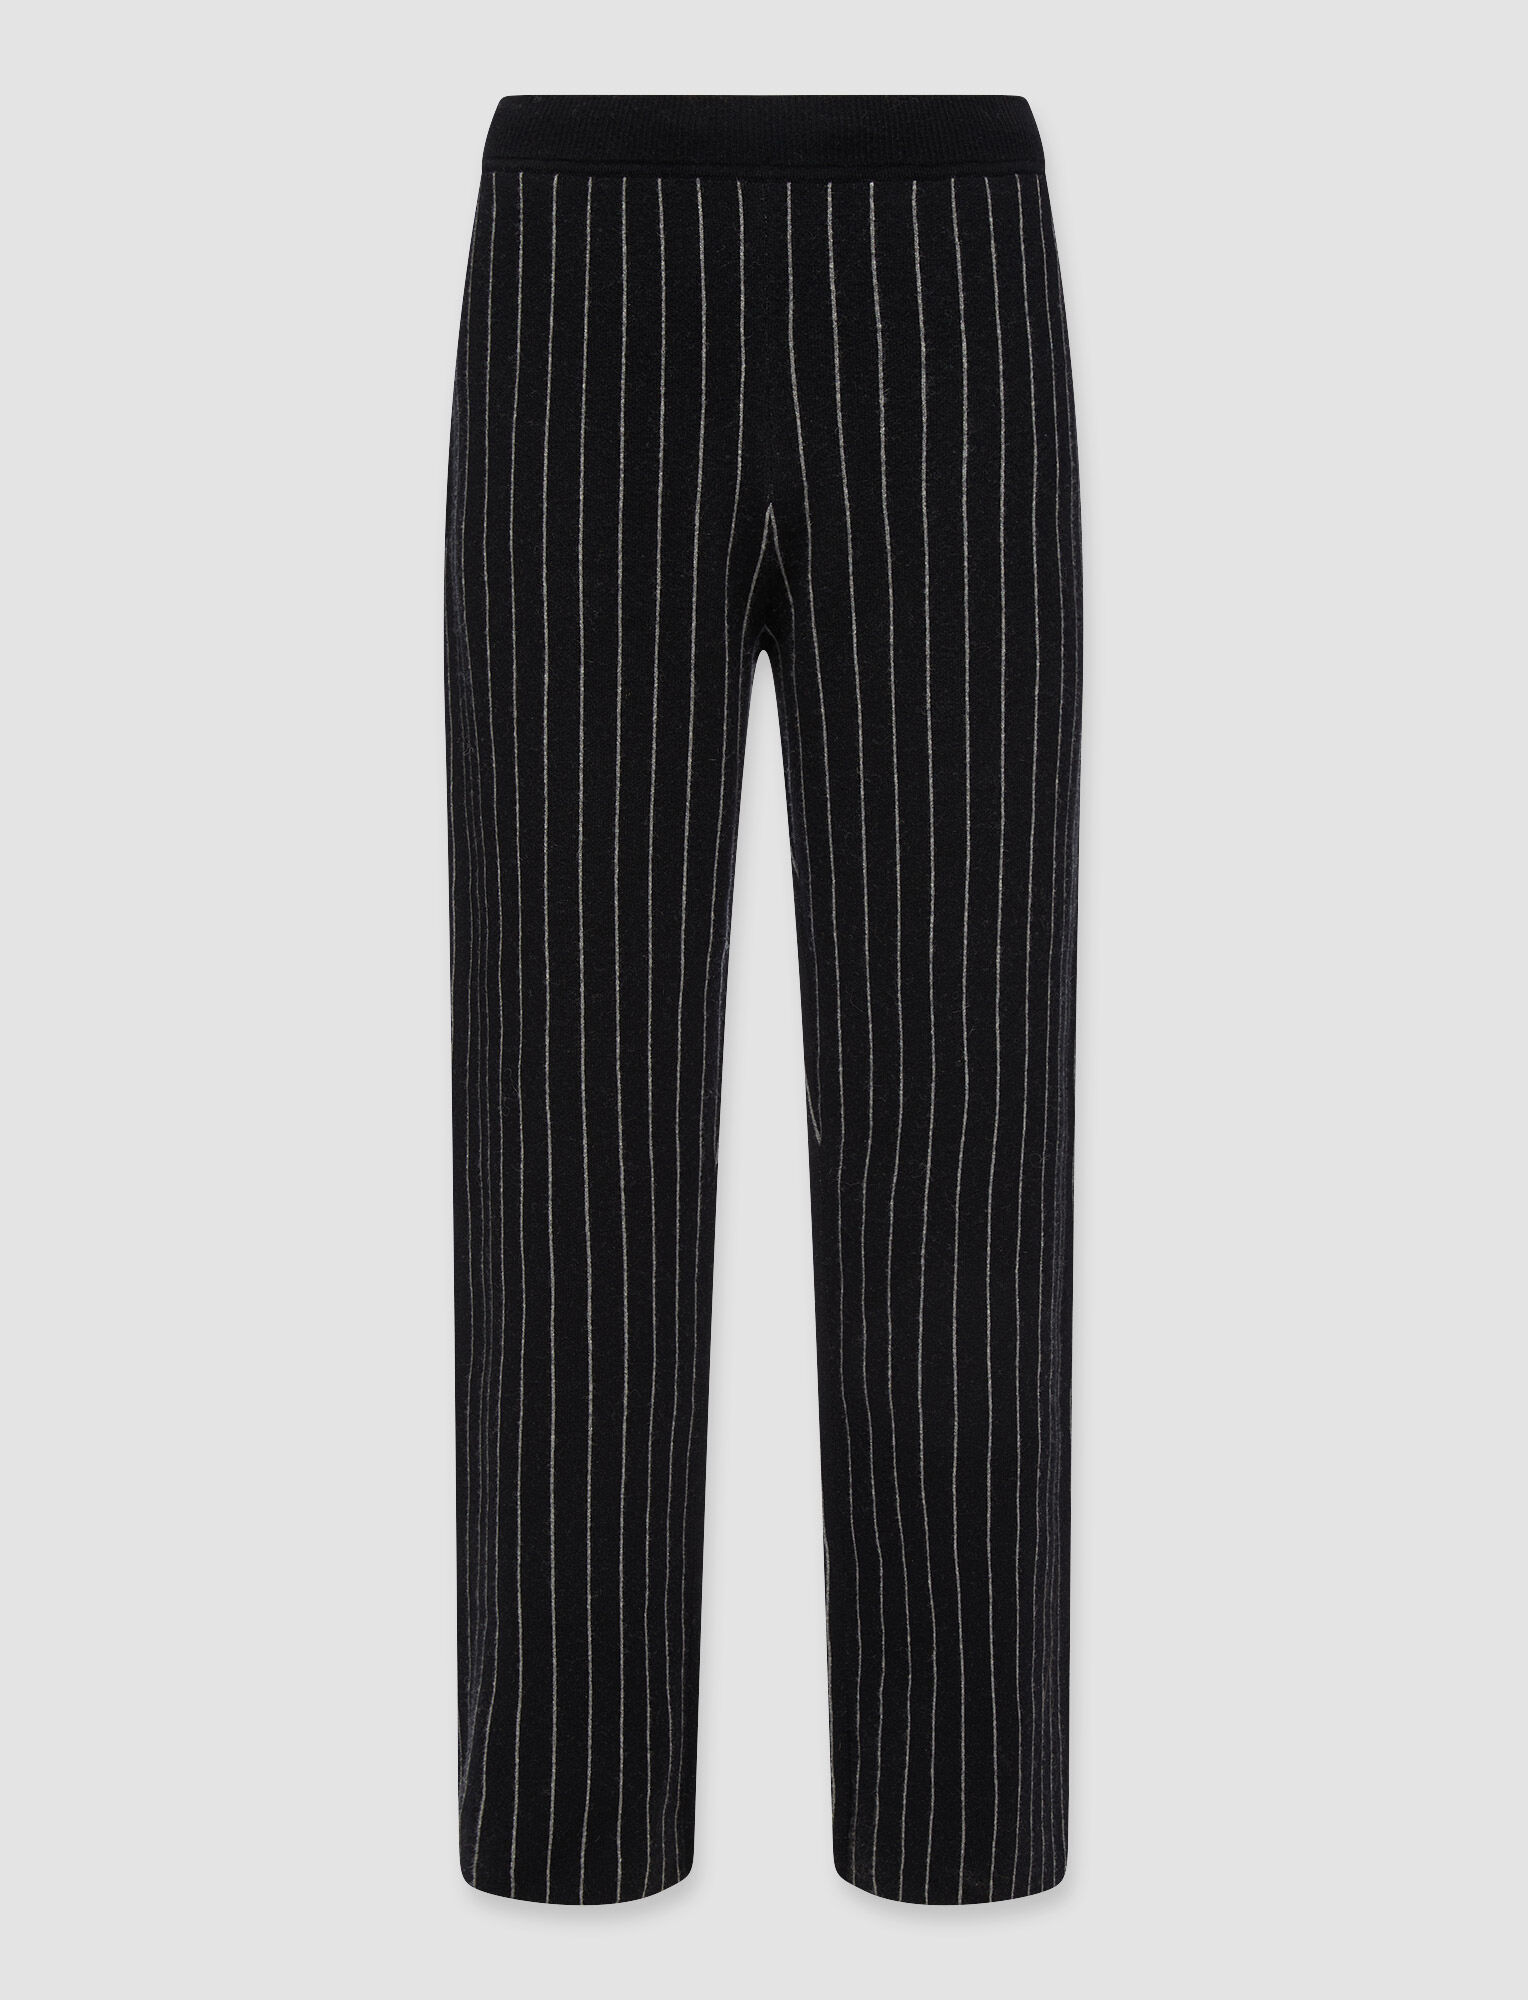 Joseph, Pinstripe Knit Trousers, in Black combo